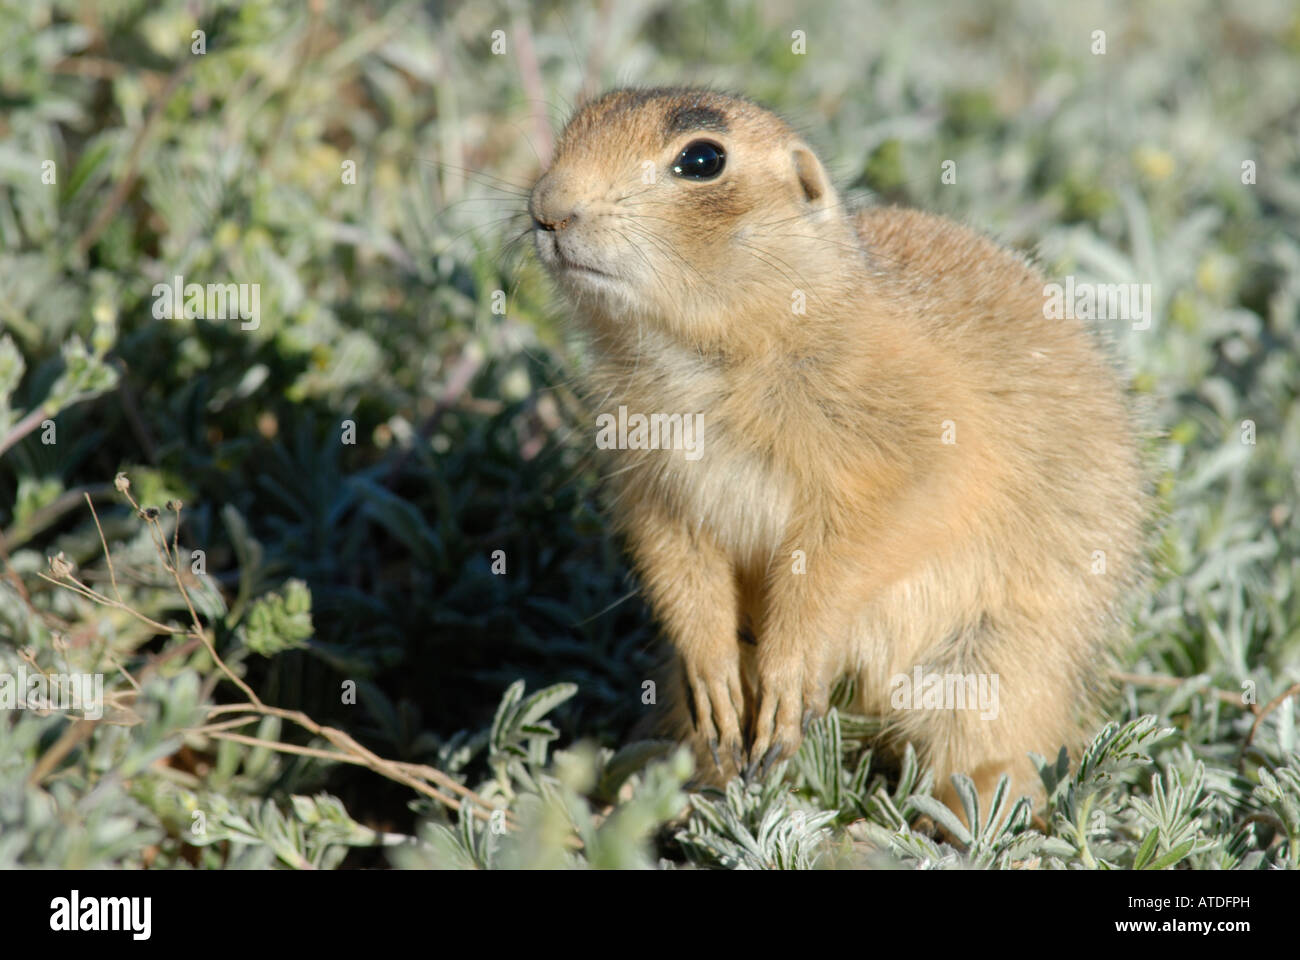 Stock photo of a young Utah prairie dog. Stock Photo